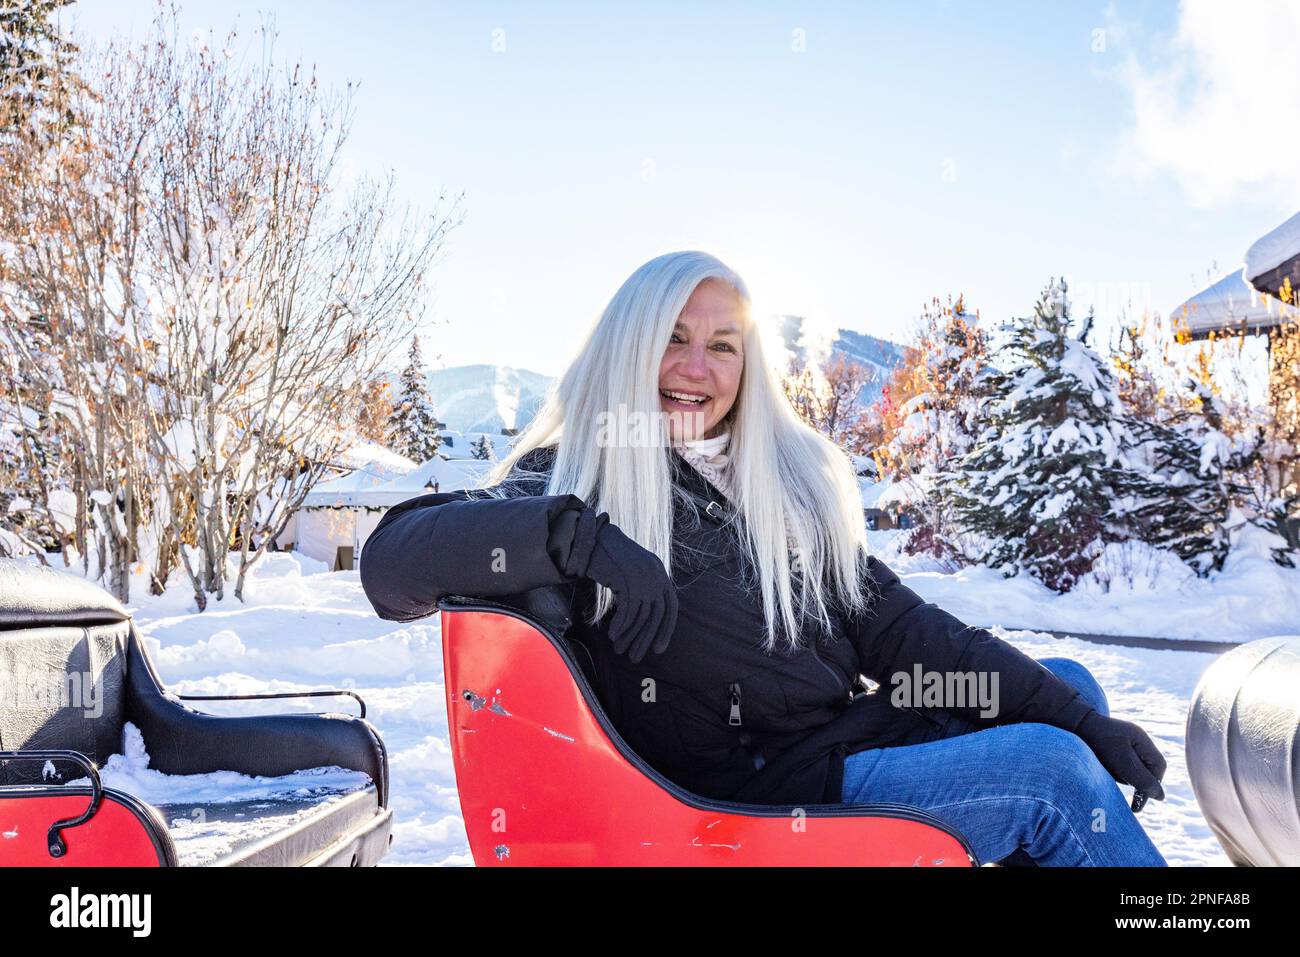 United States, Idaho, Sun Valley, Portrait of senior woman sitting in snowy sleigh Stock Photo